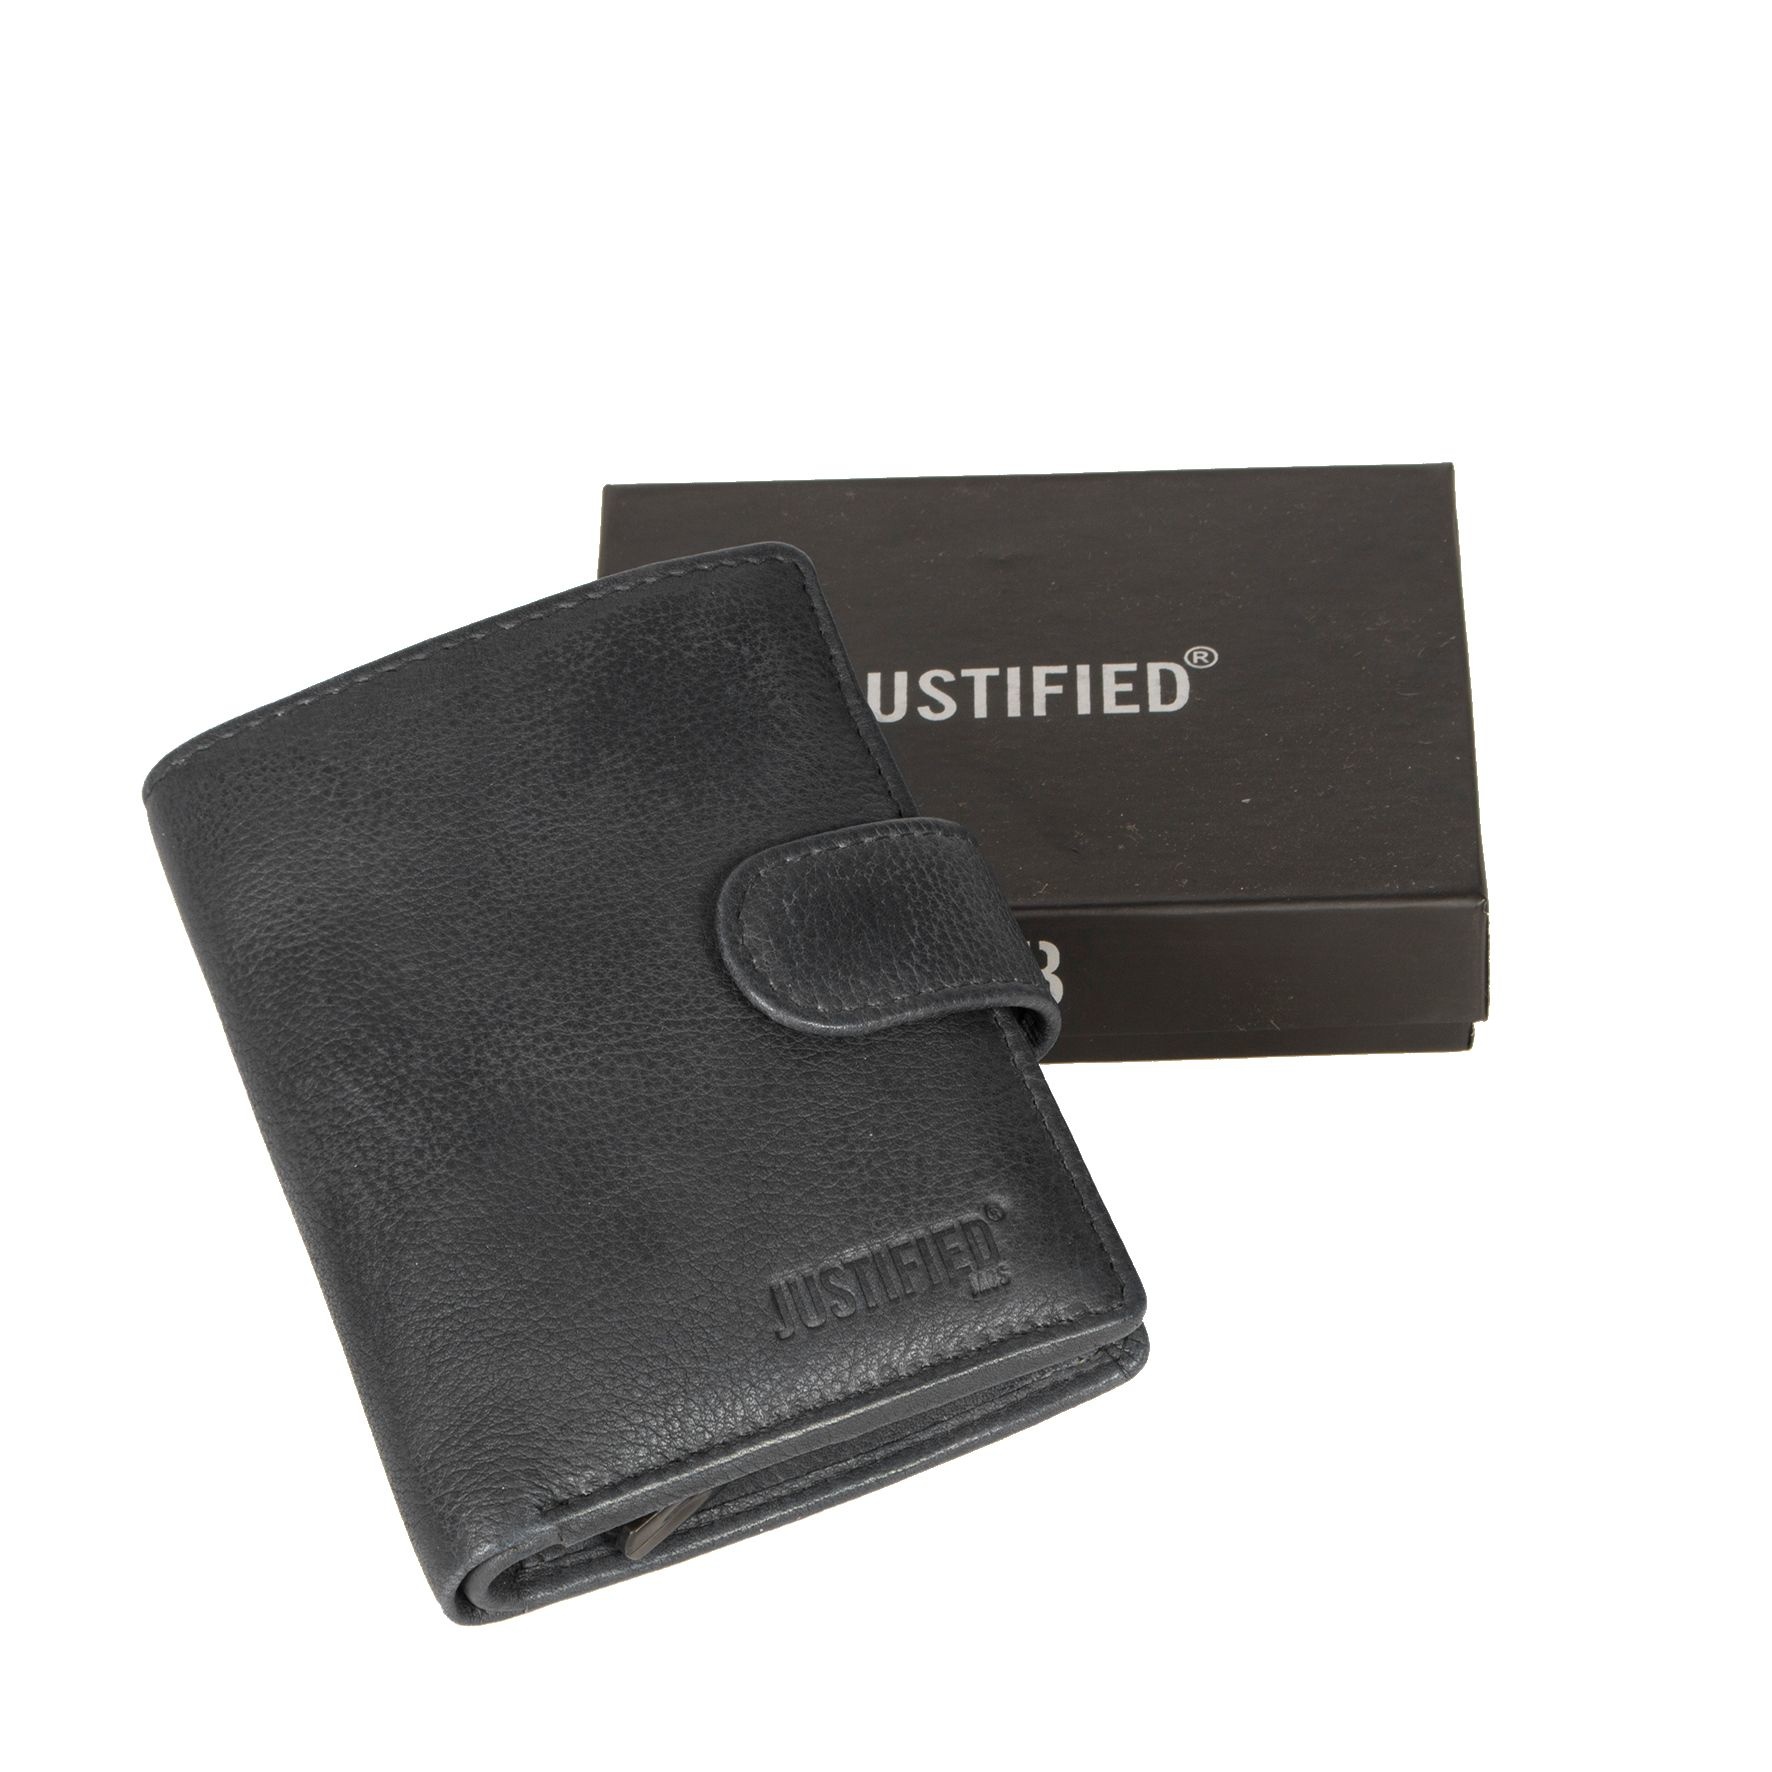 Justified Kailash Leder creditcard holder black + coin pocket + box